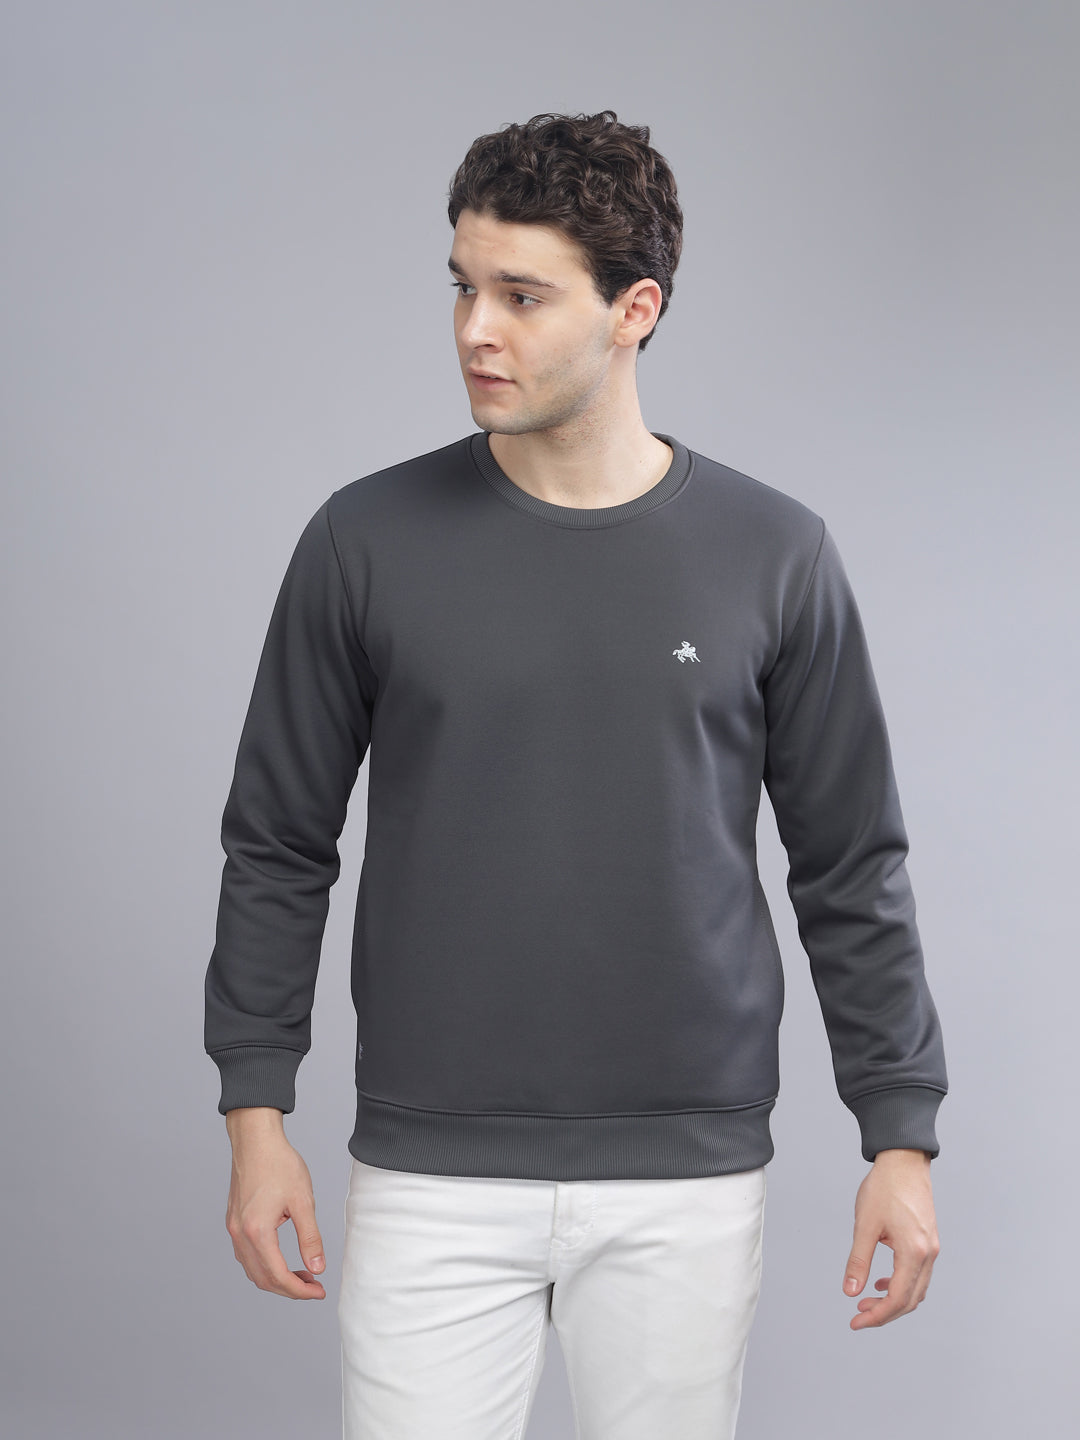 Men's Basic Round Neck Fleece Sweatshirt